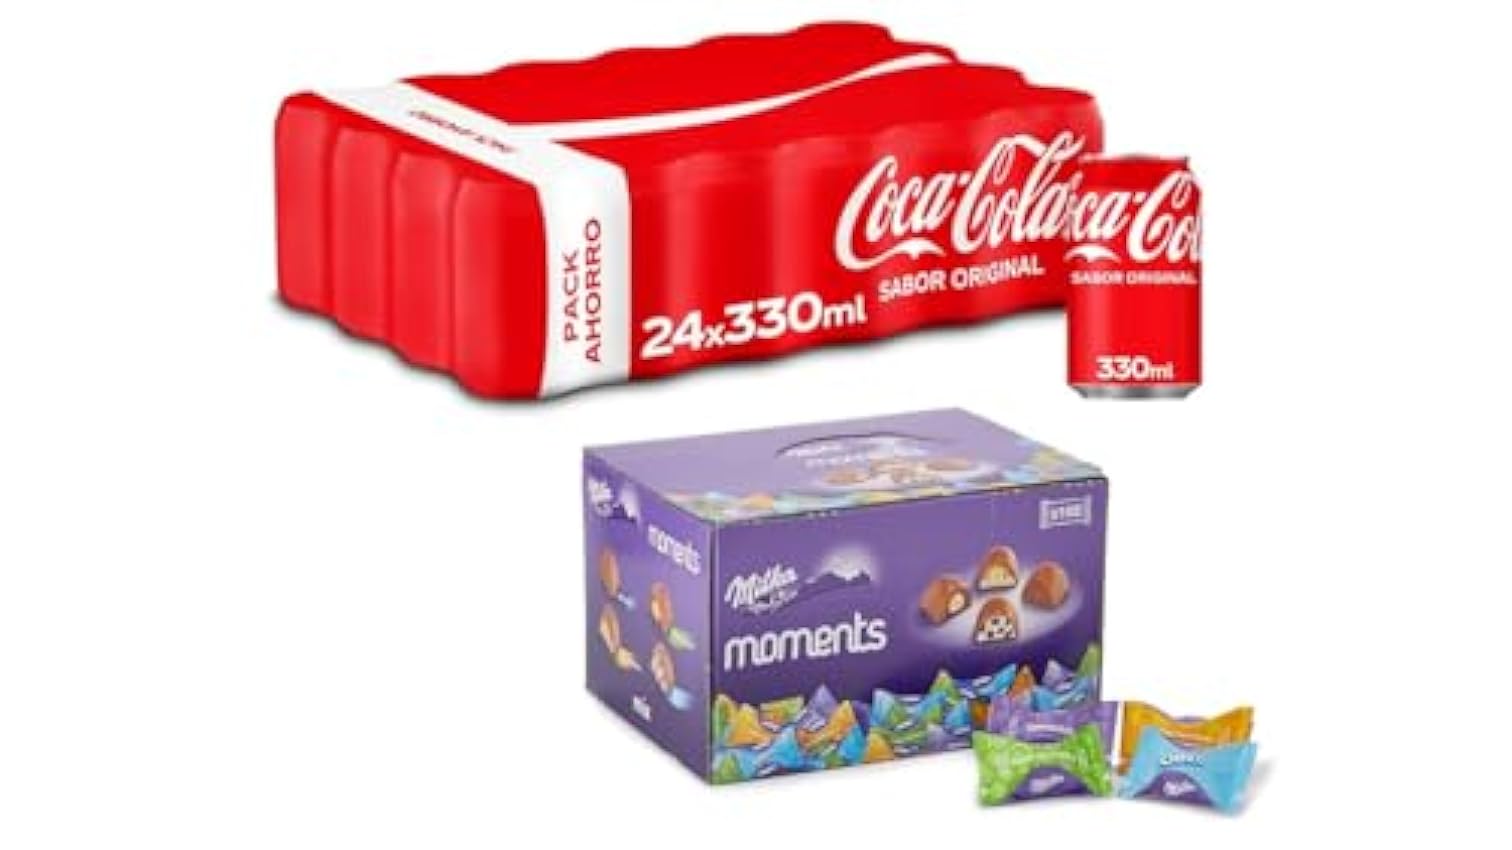 Coca-Cola Sabor Original, Pack de 24 latas de 330ml + M